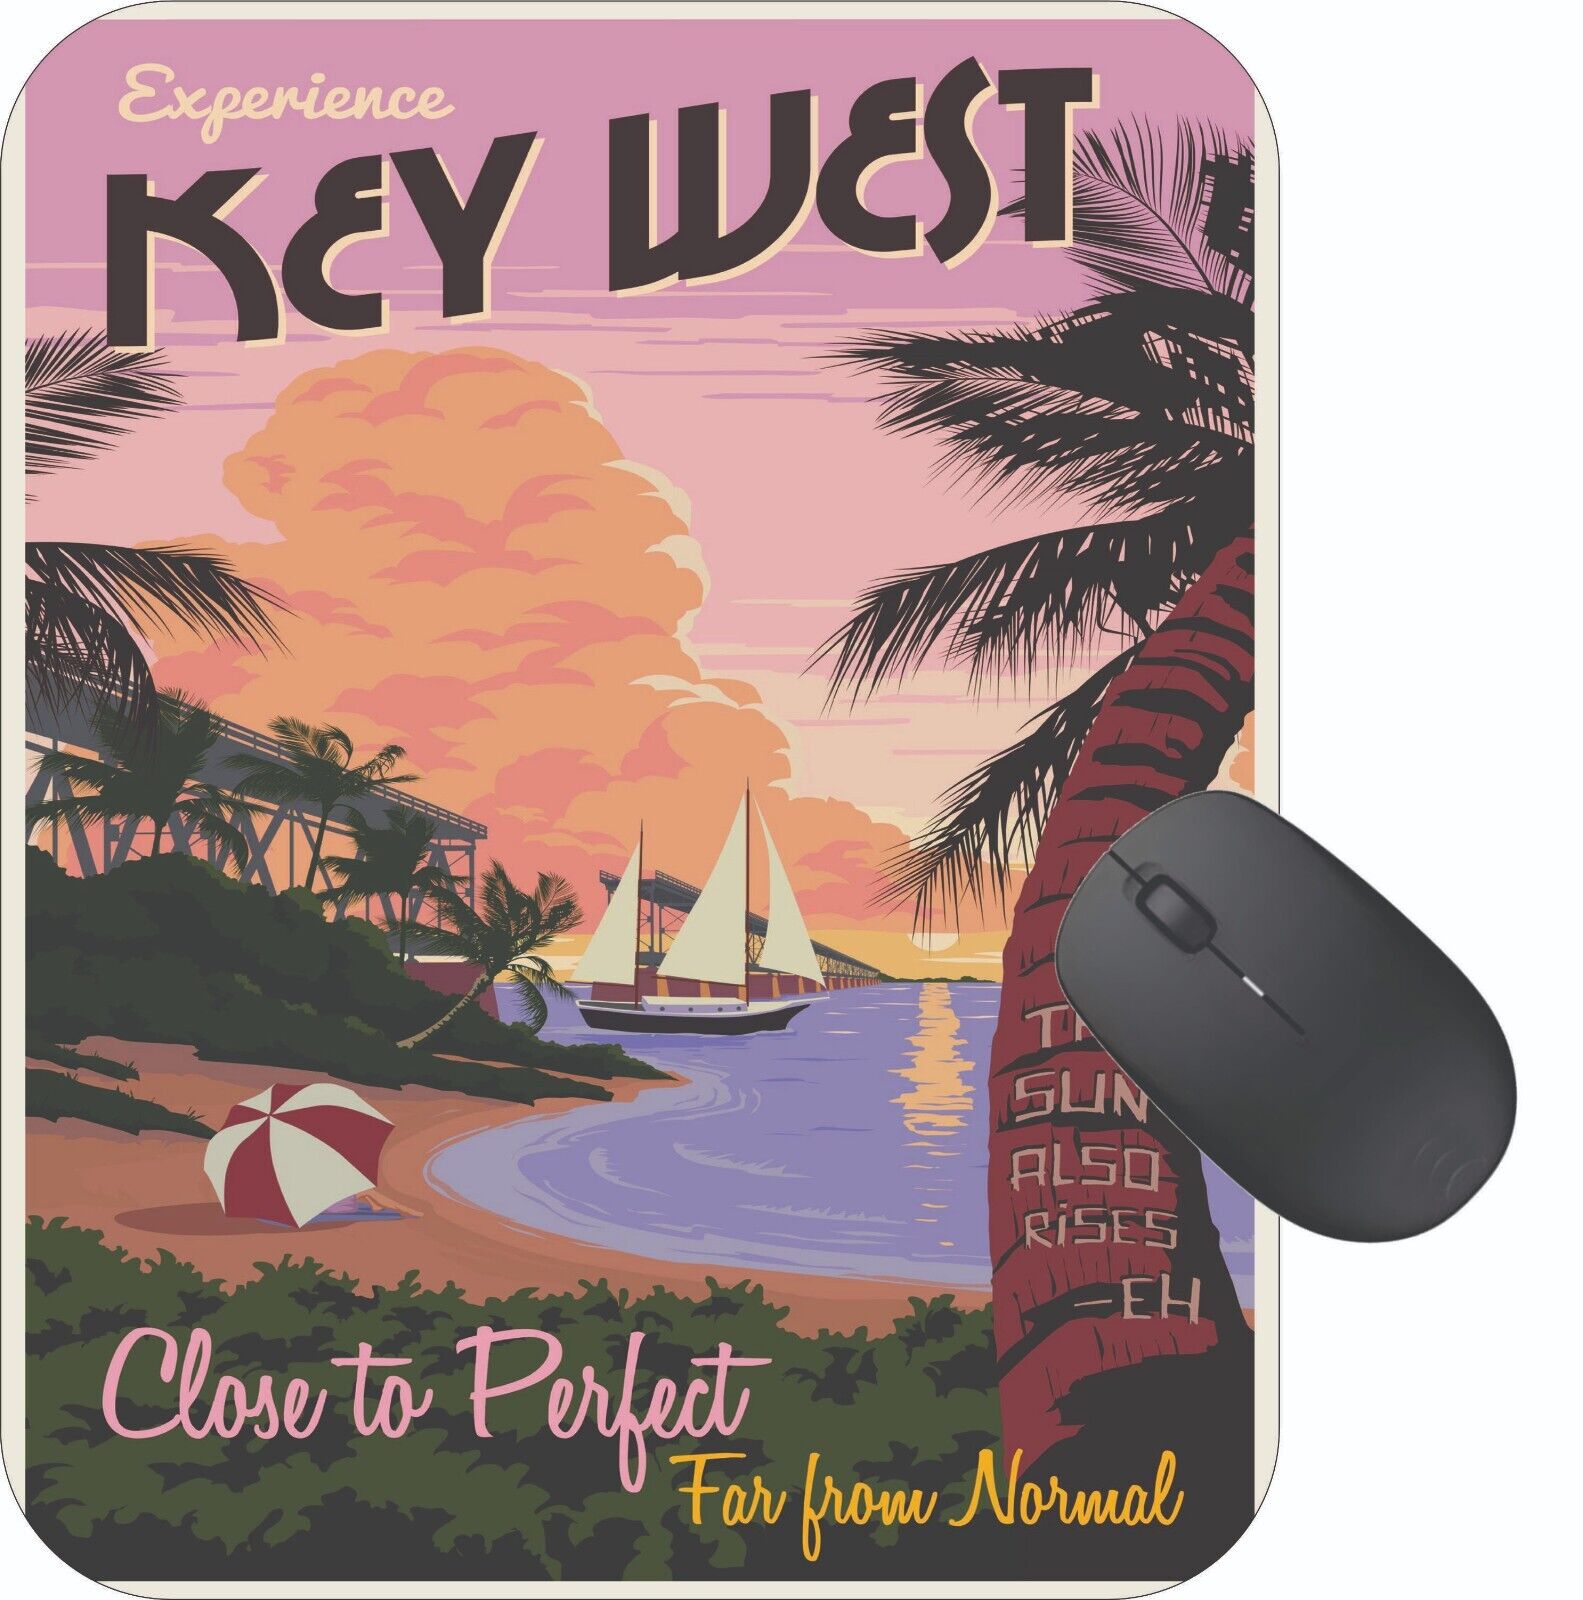 Key West Mouse Pad Stunning Photos Travel Poster Art Vintage Retro